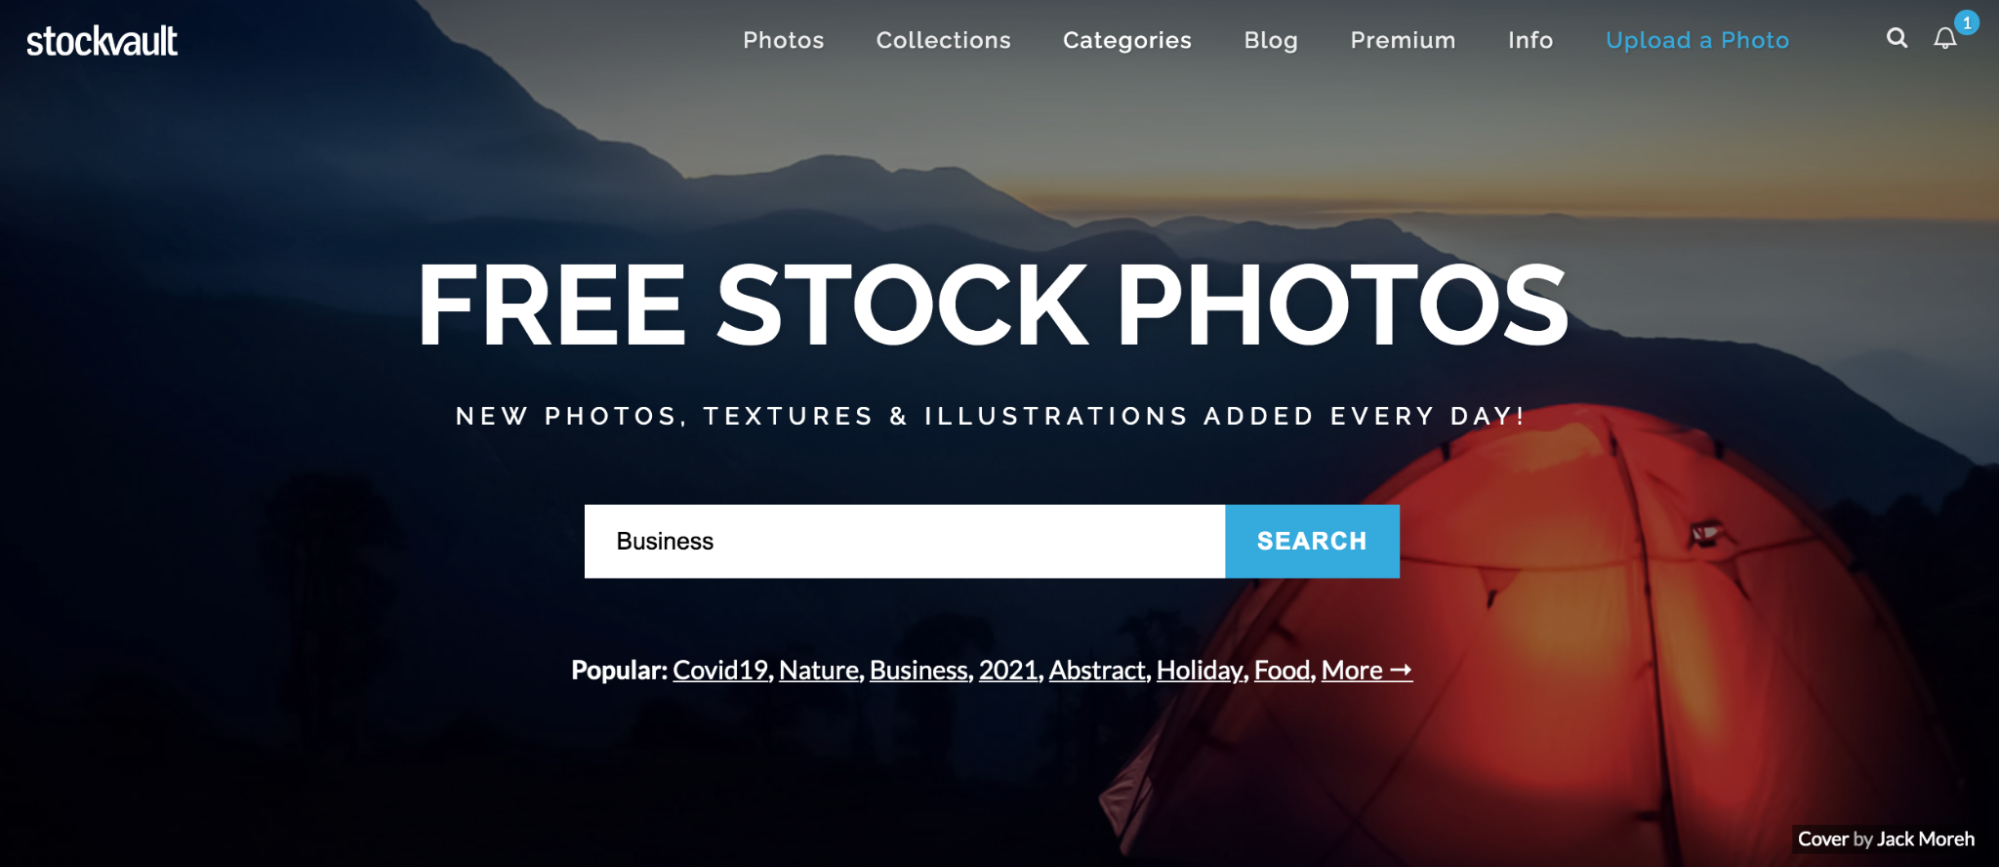 stockvault free stock photo site homepage